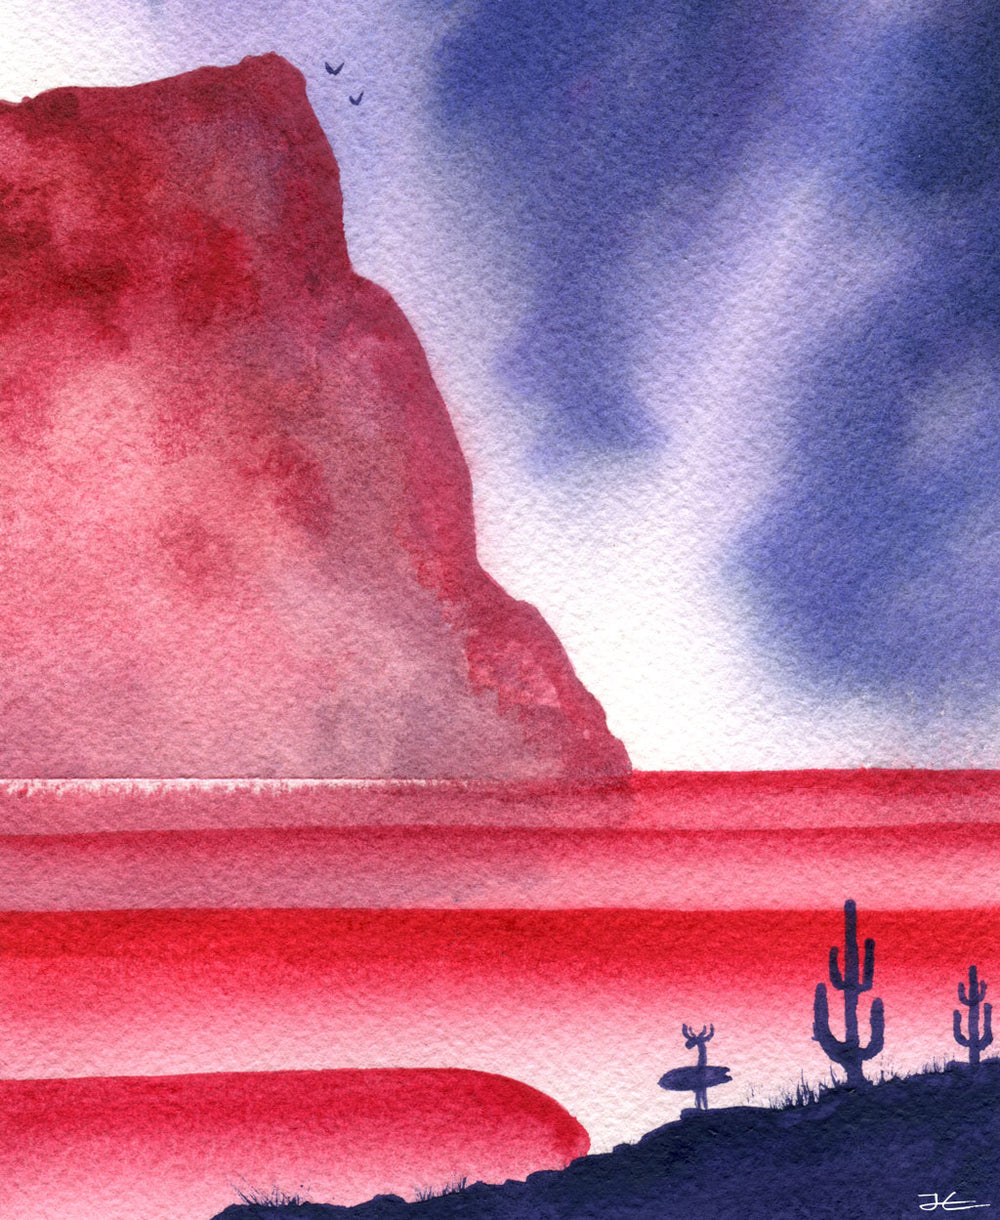 The Red Mountain. Original illustration